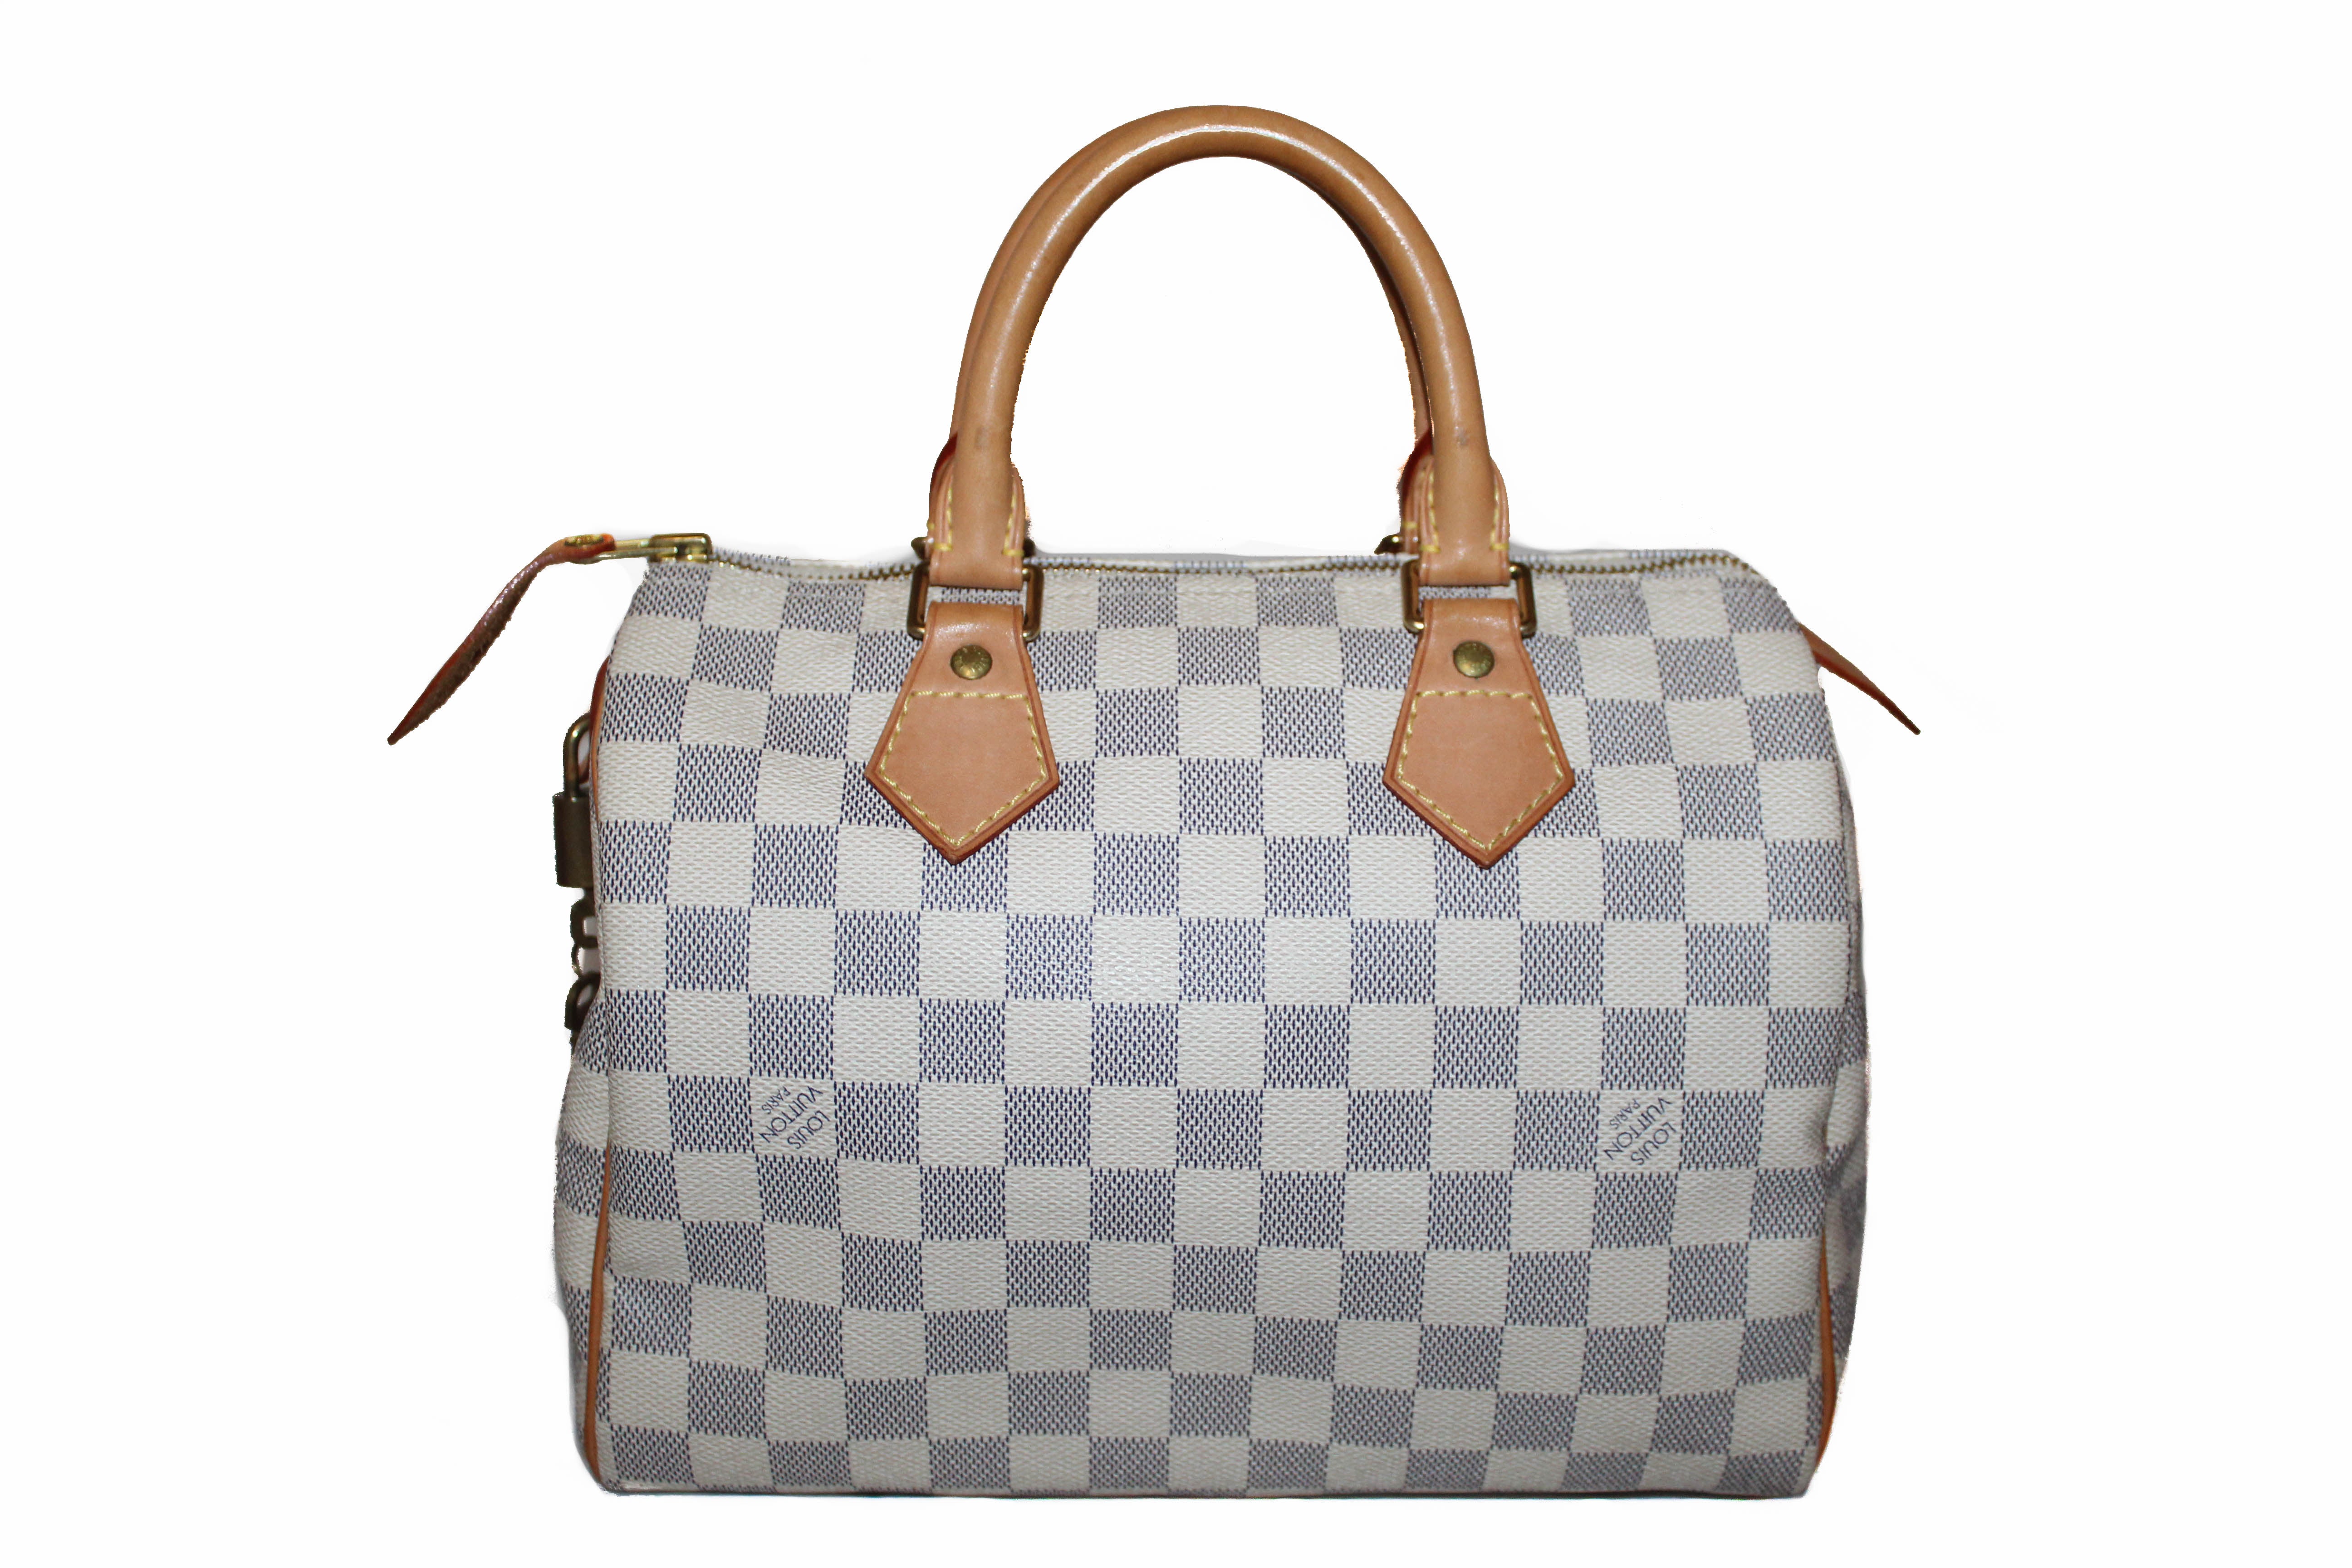 Authentic Louis Vuitton Damier Azur Speedy 25 Hand Bag